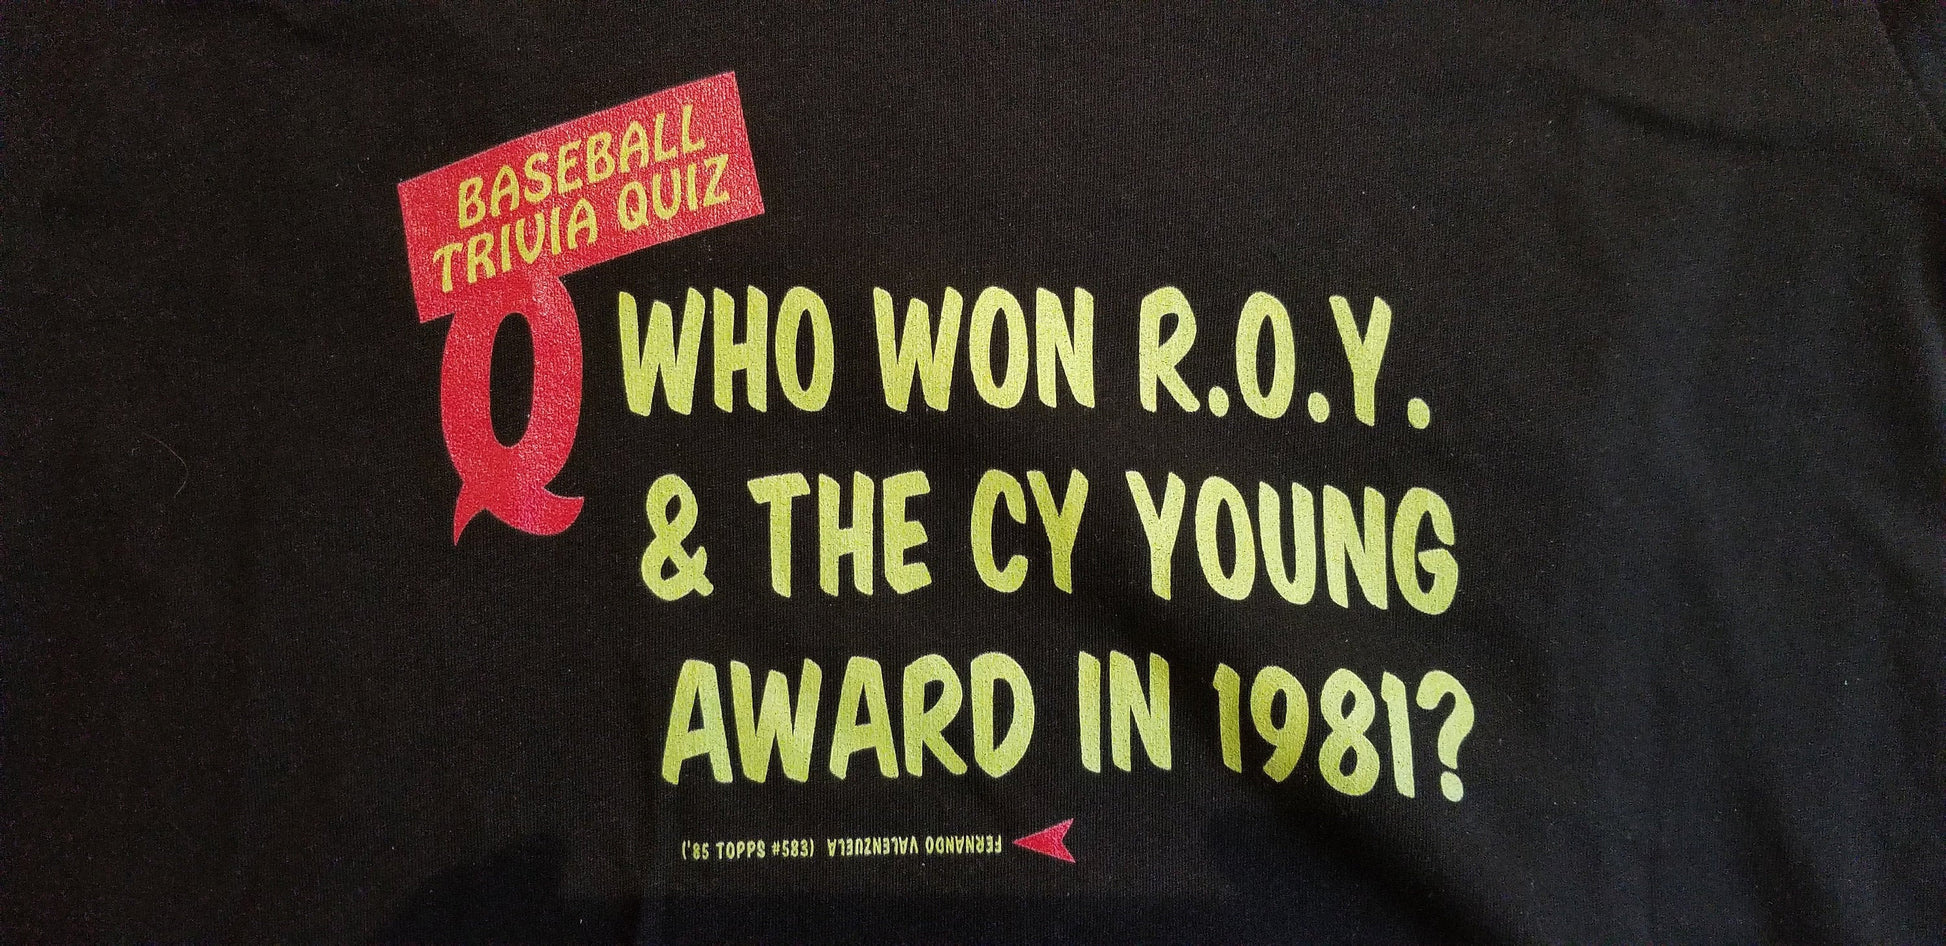 Baseball card art by Matthew Lee Rosen (aka Matthew Rosen) - 1985 Topps Baseball Trivia Quiz V-Neck (Fernando)